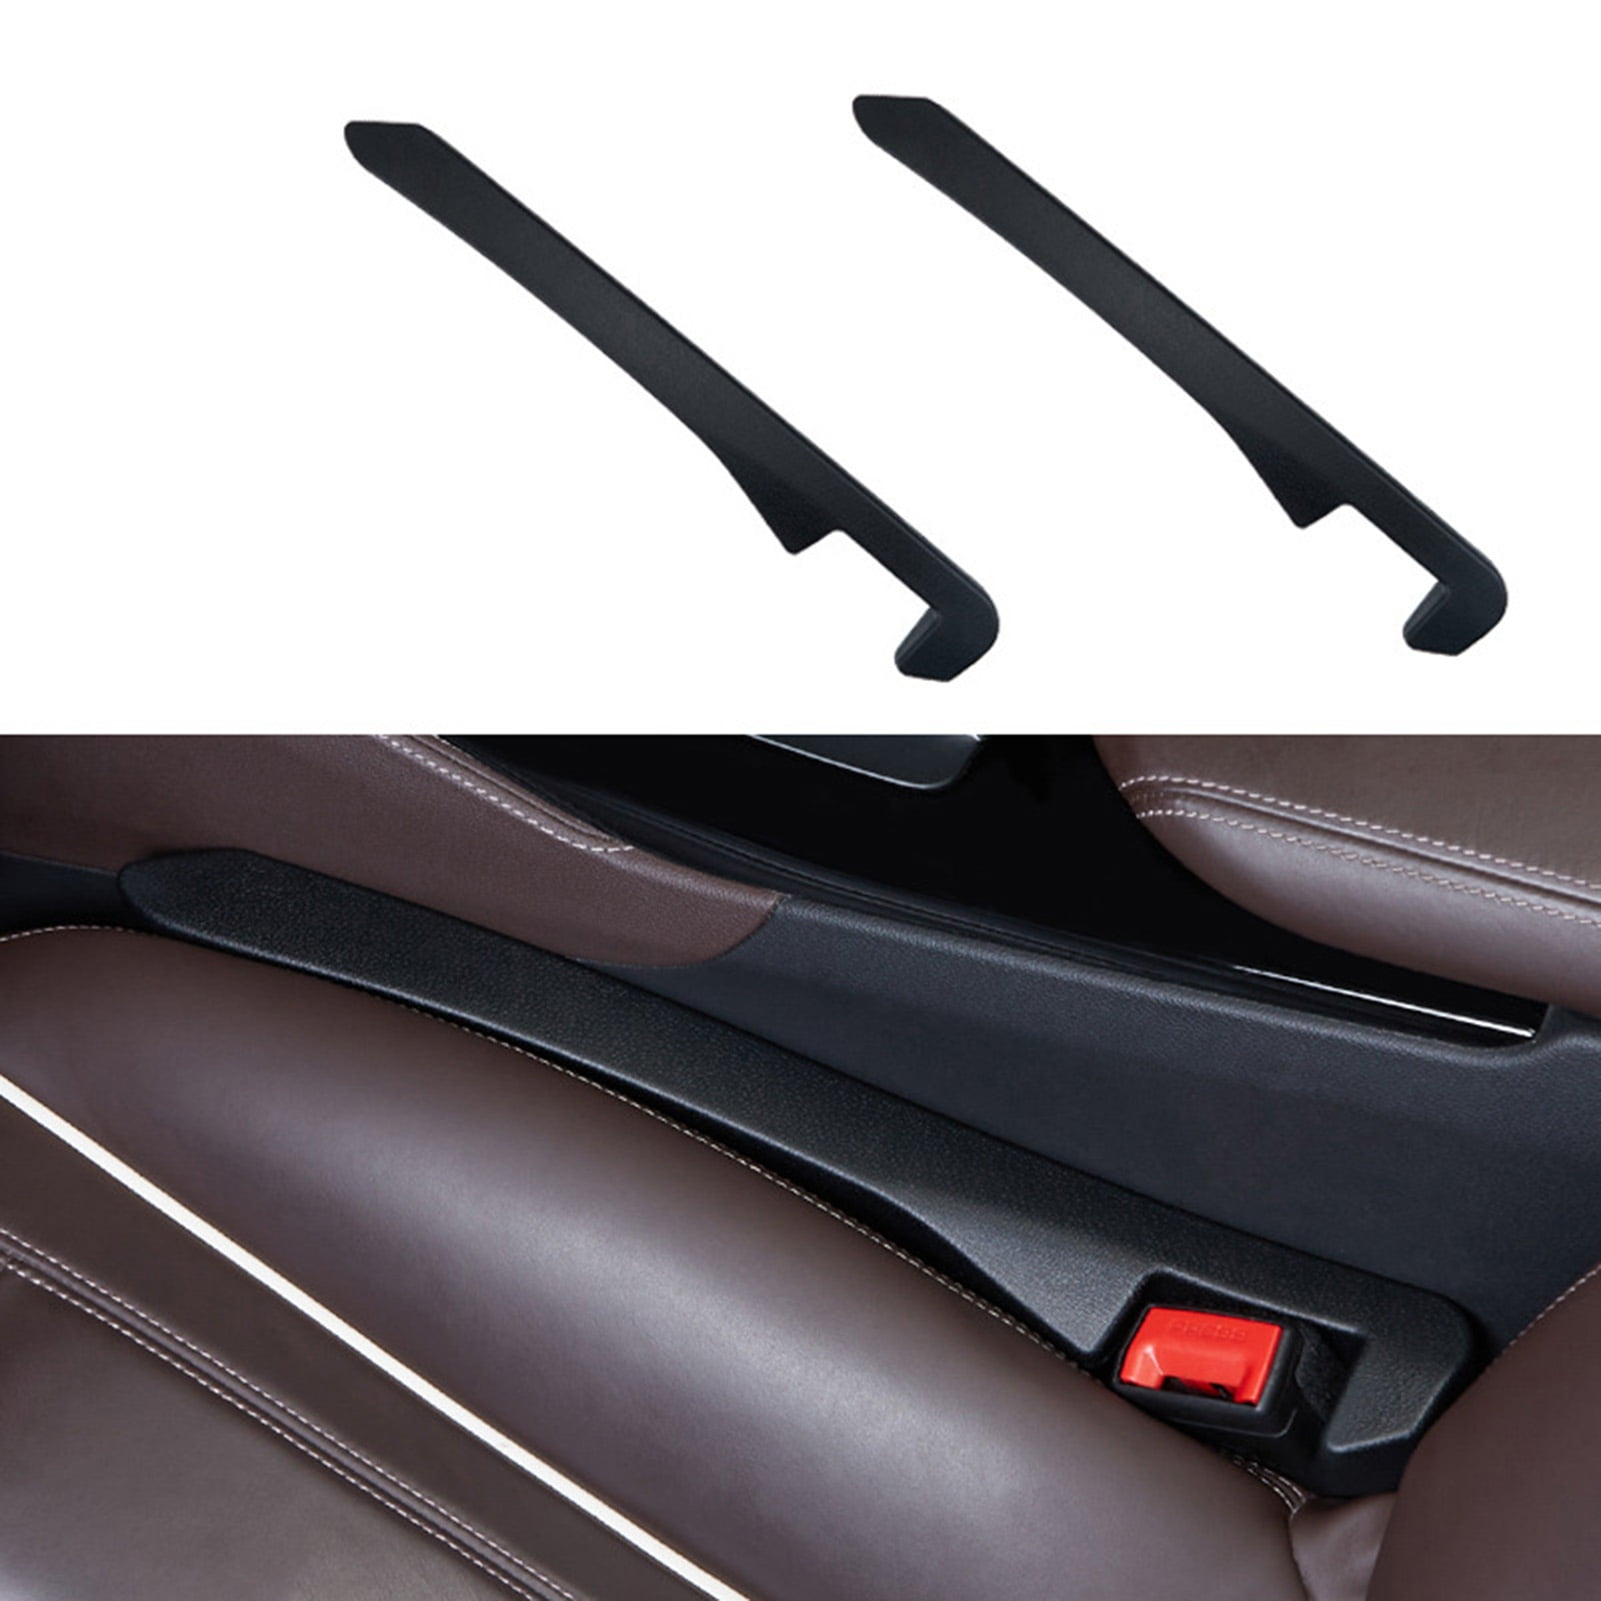 NUZYZ Car Seat Gap Filler Universal Soft Leather Interior